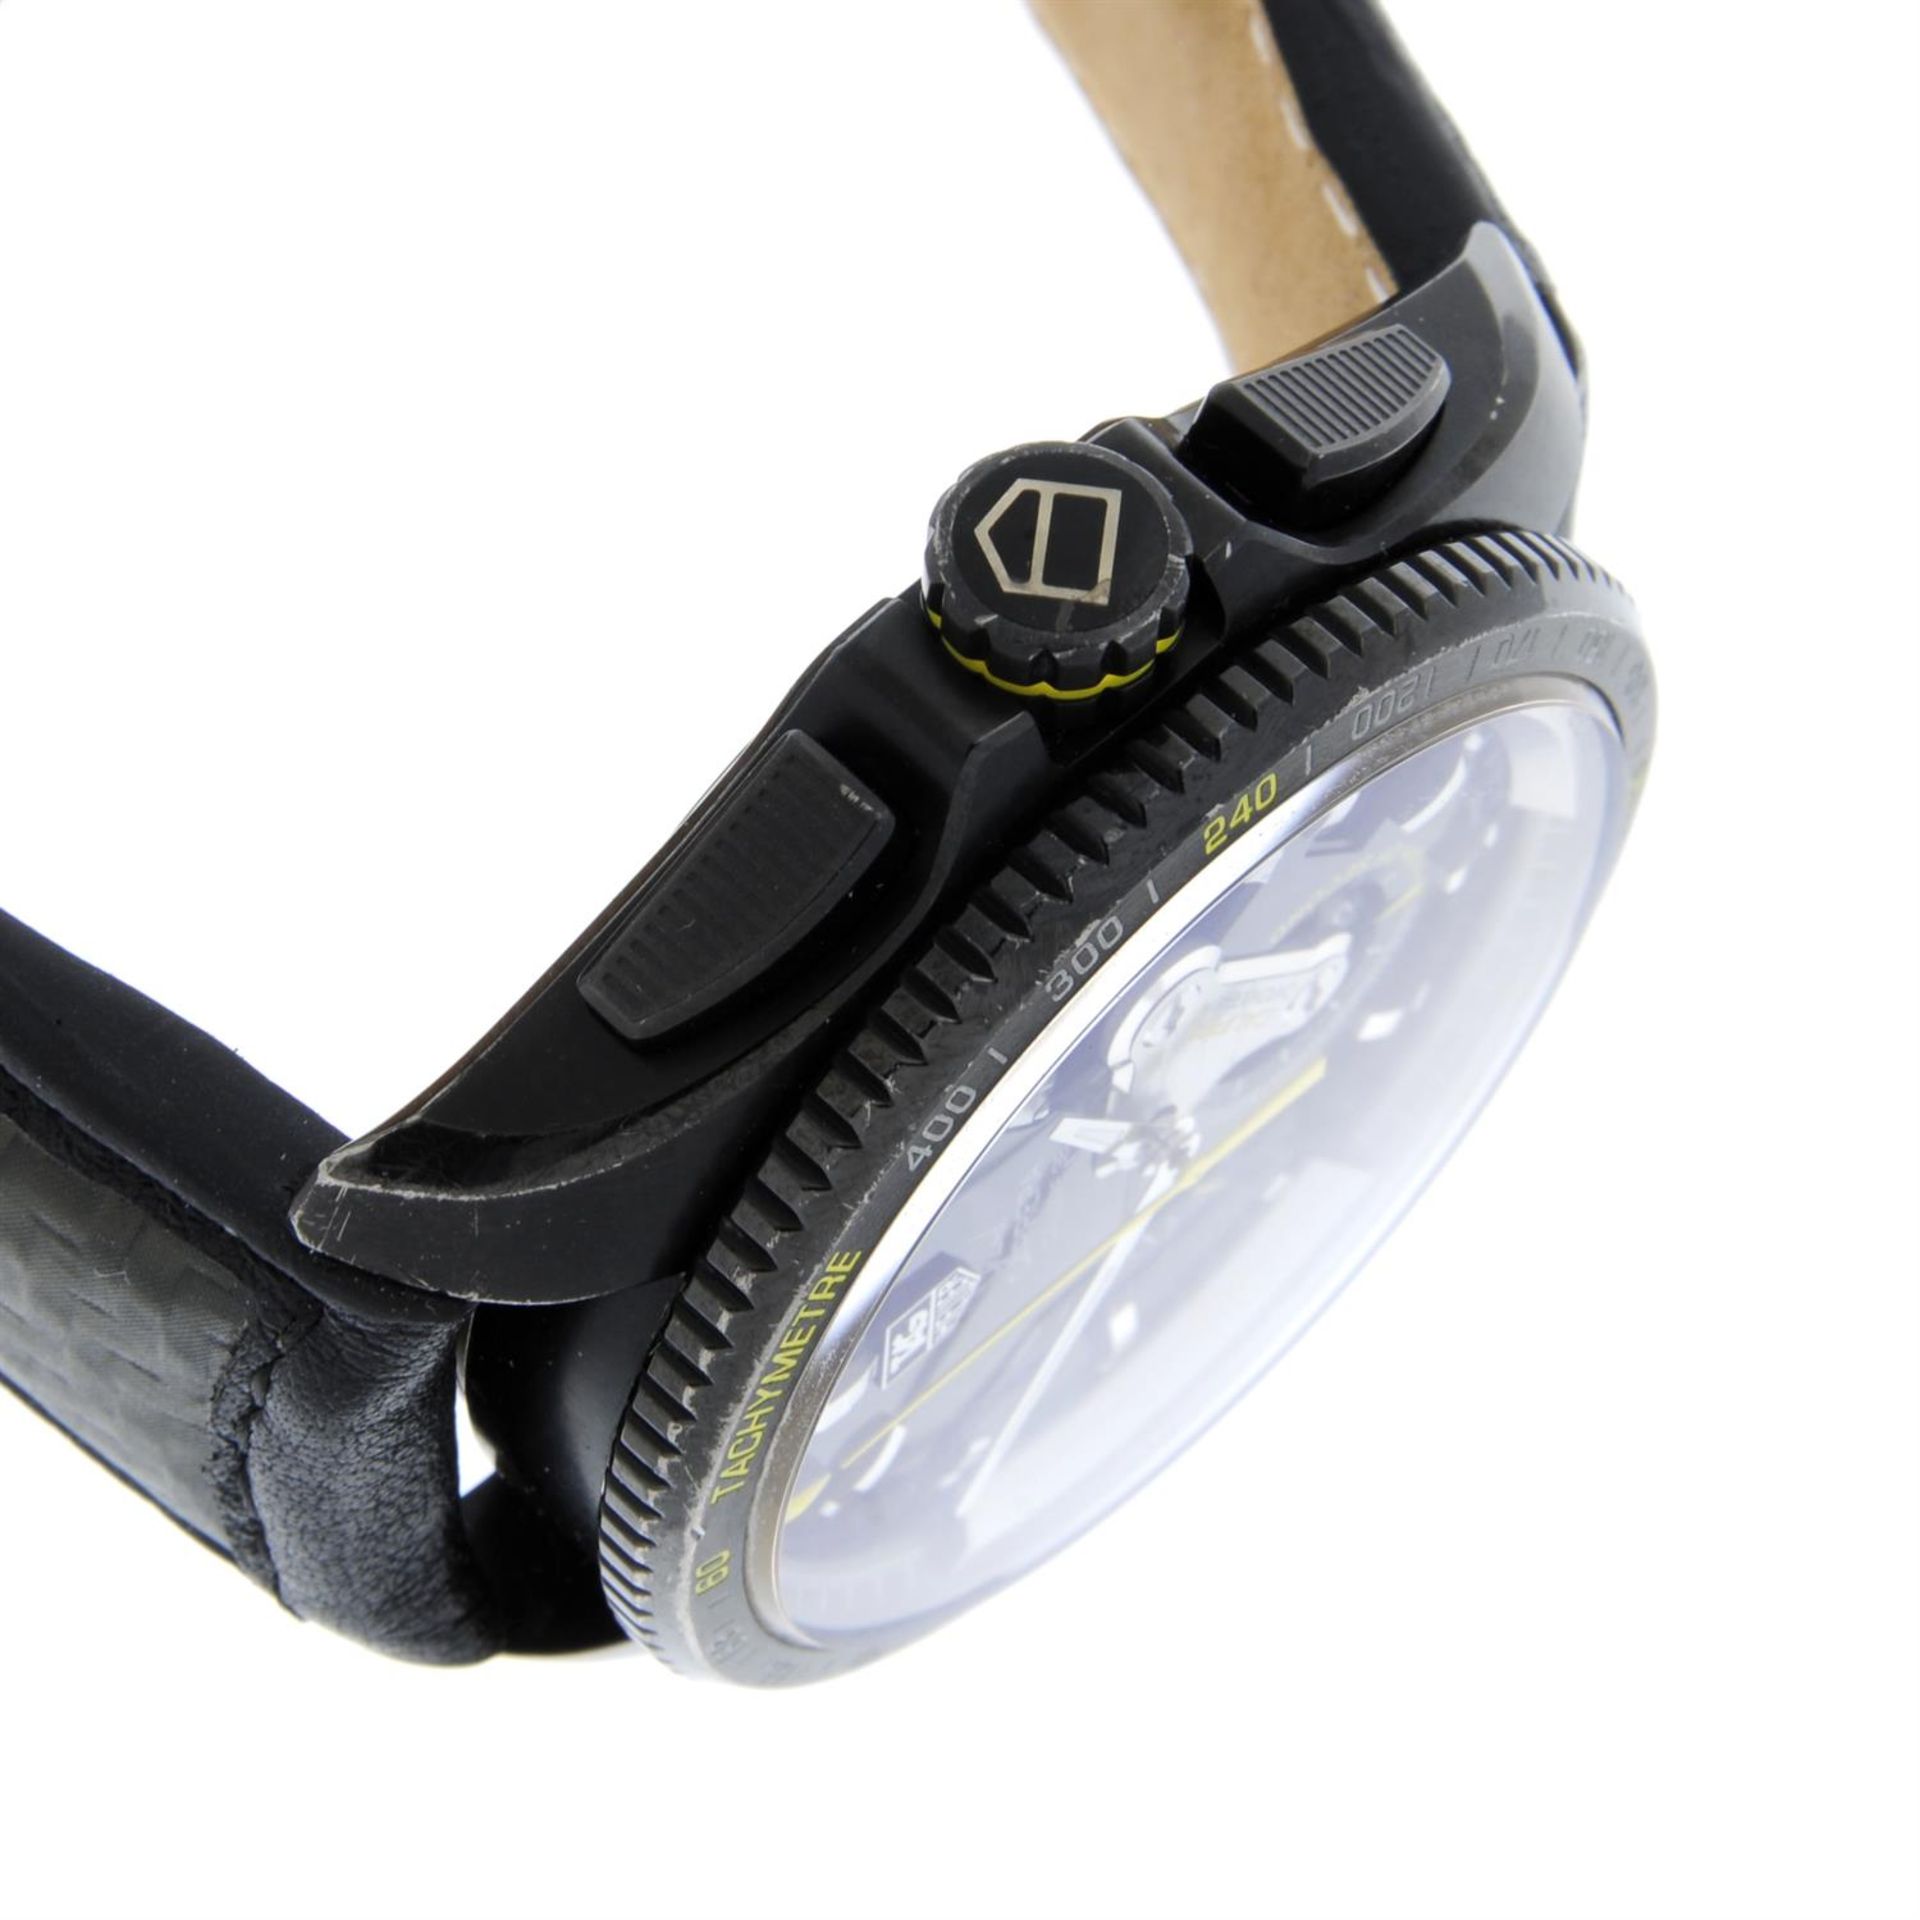 TAG Heuer - a Grand Carrera chronograph watch, 43mm. - Bild 3 aus 8